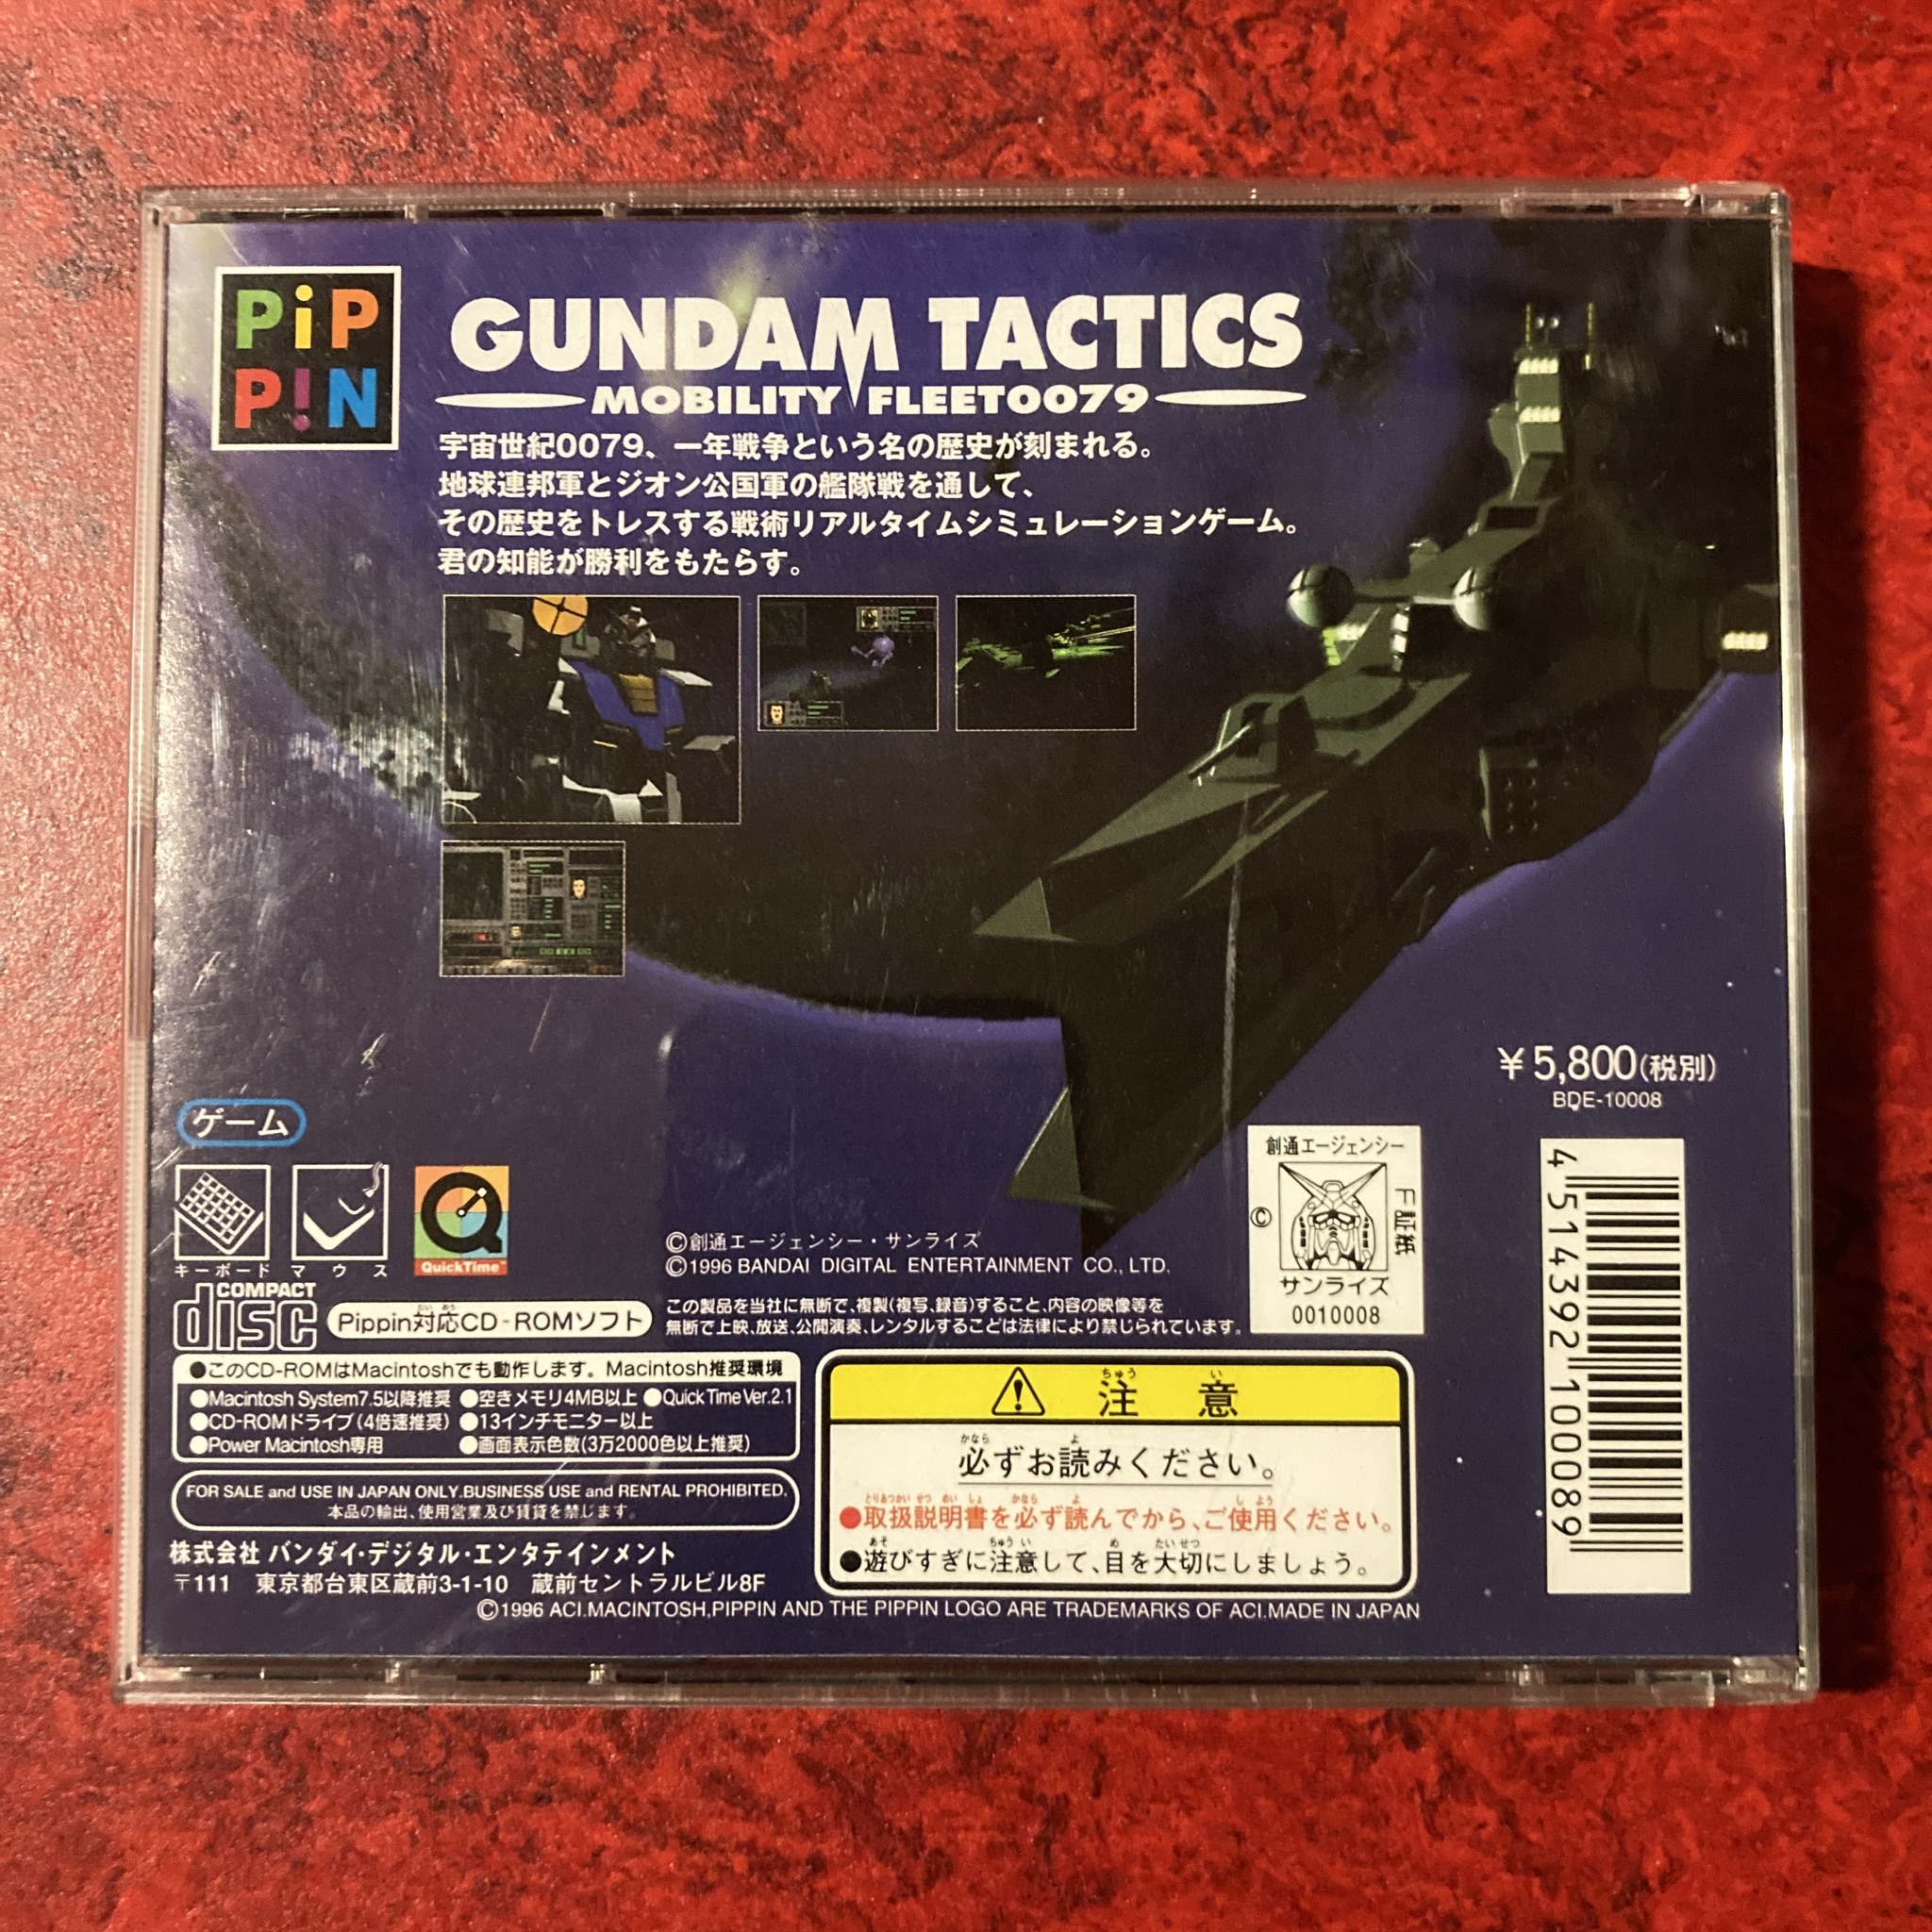 Gundam Tactics – Mobility Fleet0079 (Pipp!n Atmark / Power Macintosh)